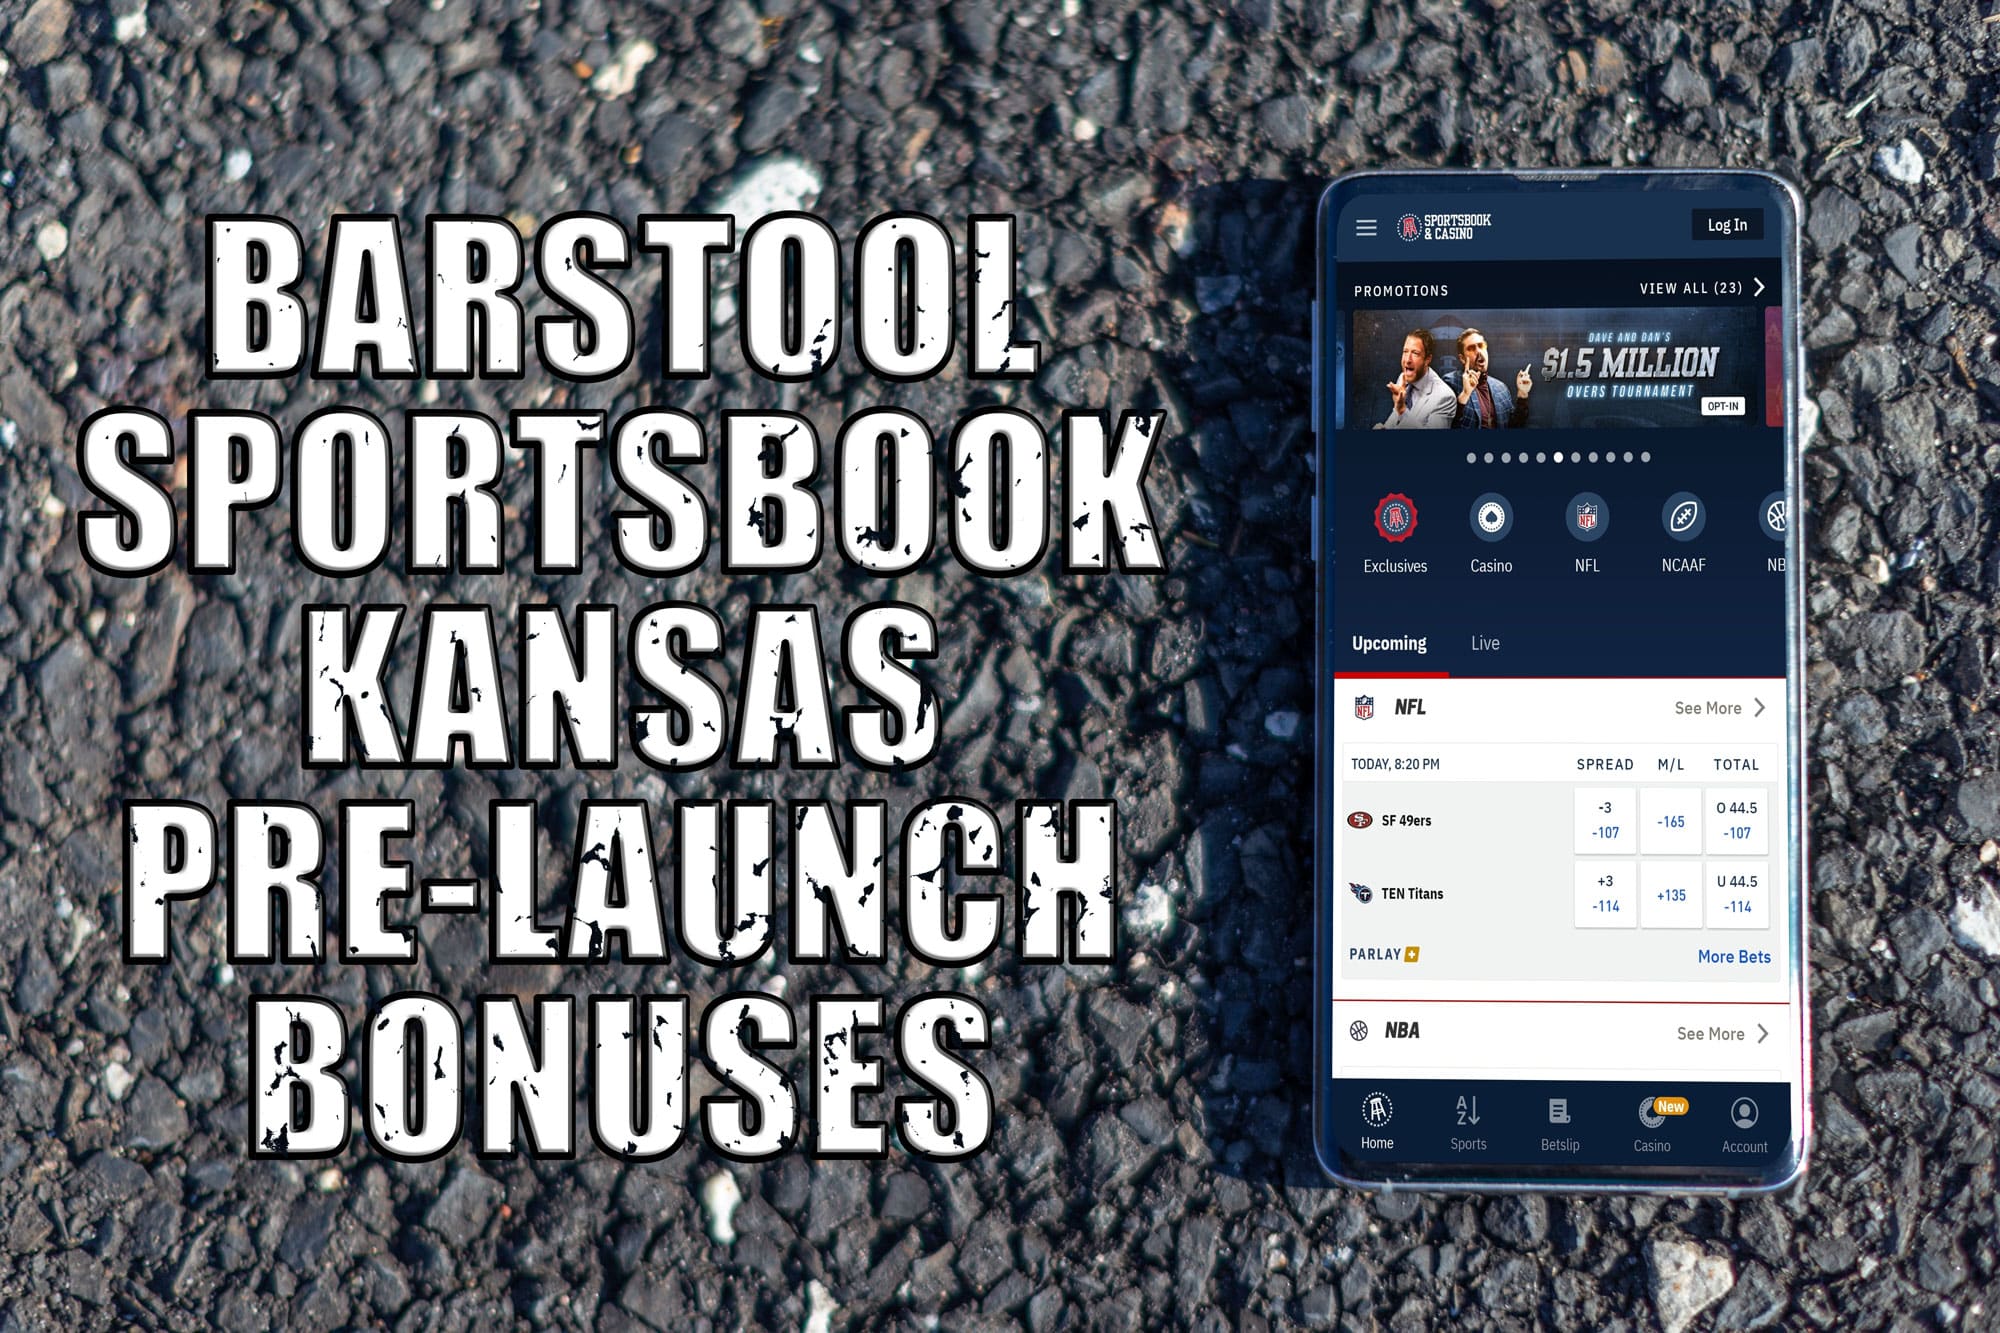 Barstool Sportsbook Kansas: Get Pre-Launch Bonuses Before Time Runs Out